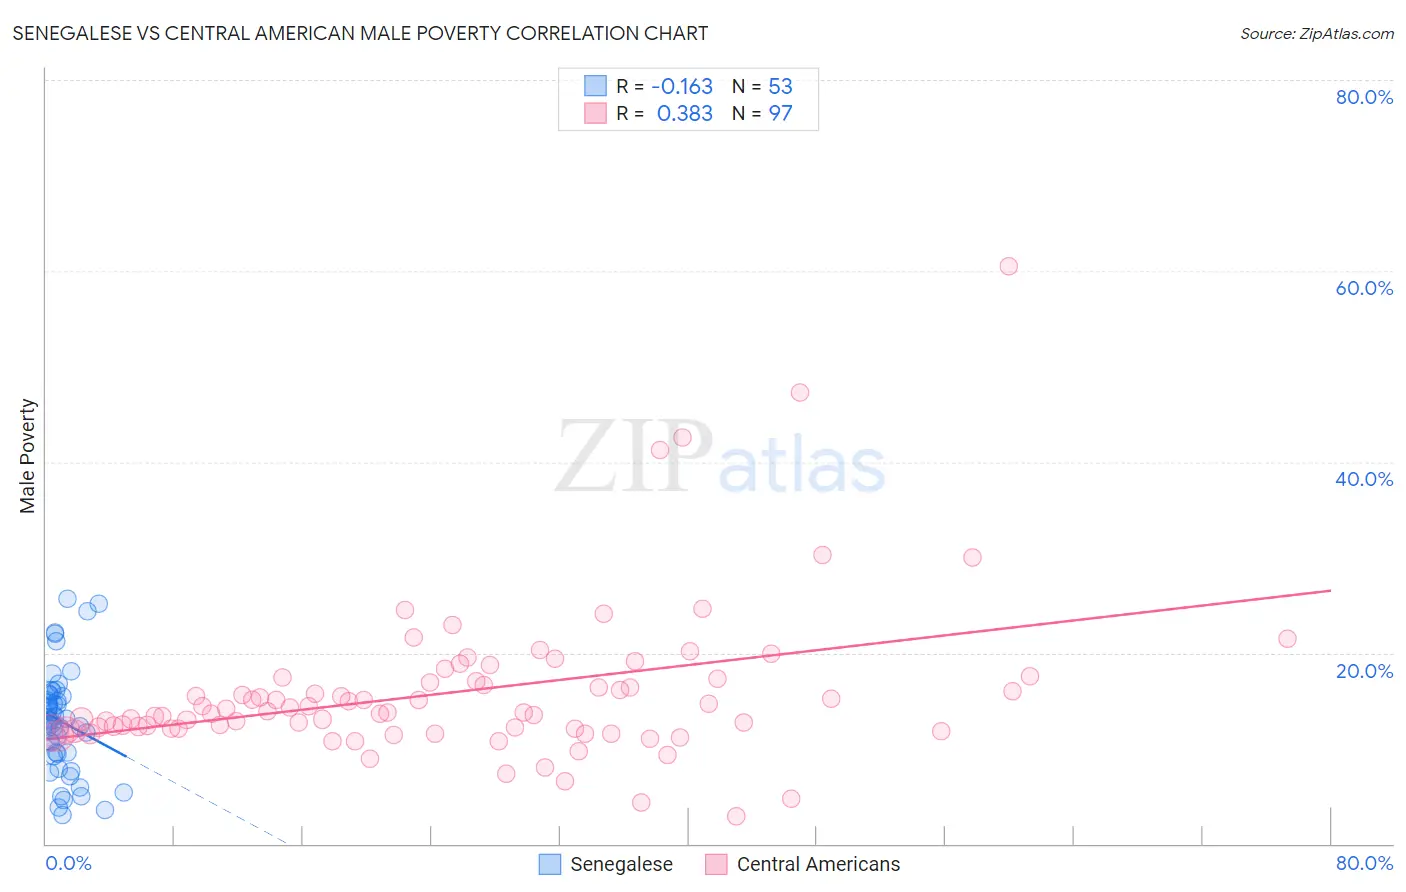 Senegalese vs Central American Male Poverty